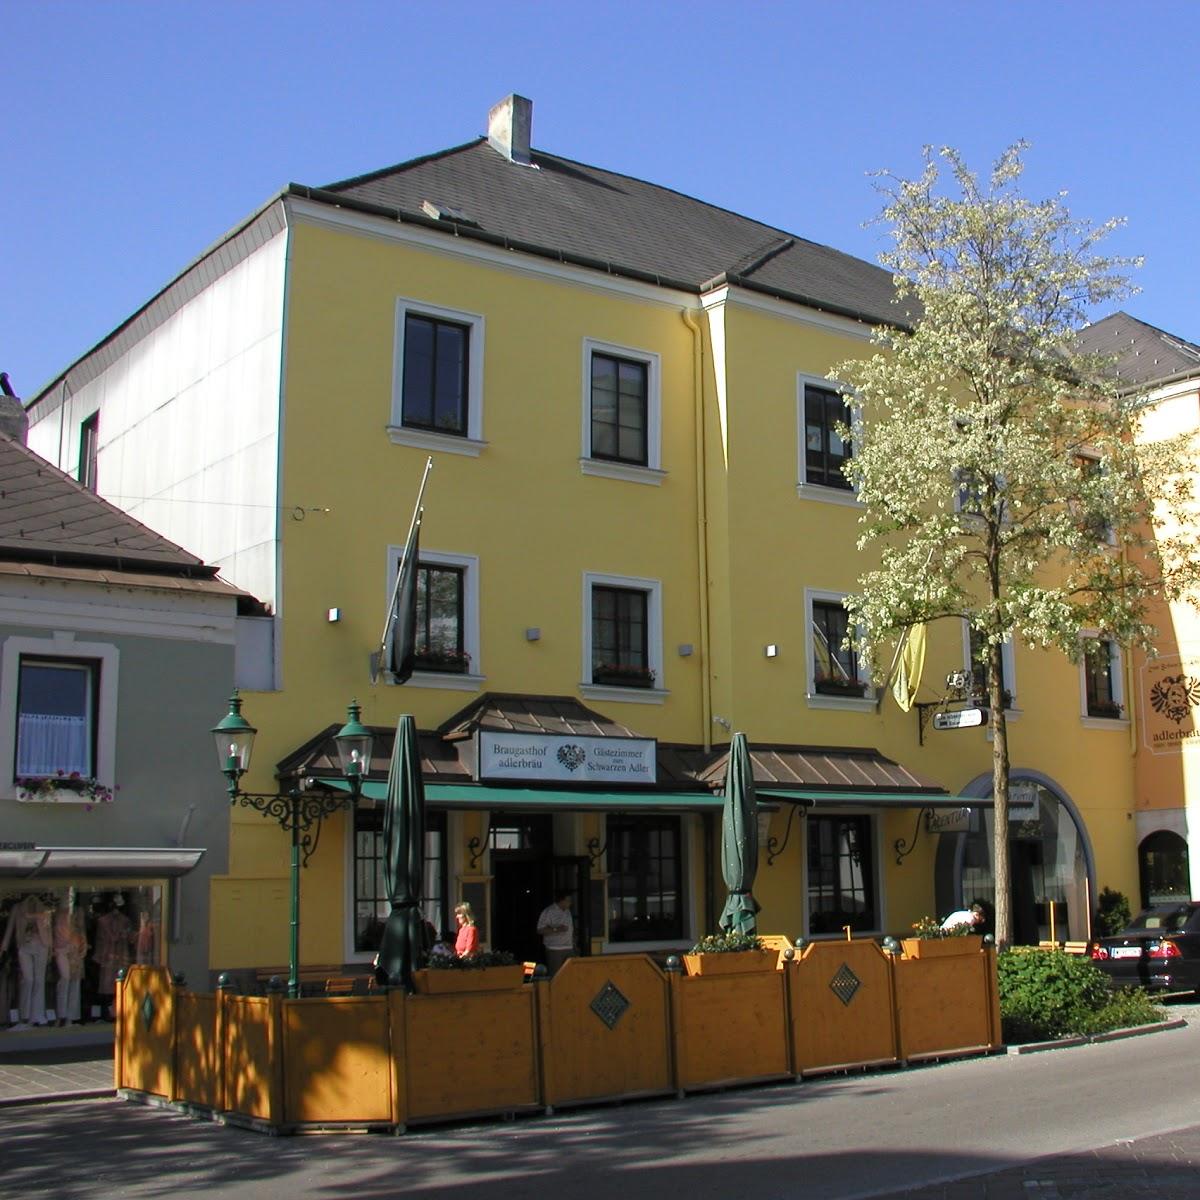 Restaurant "Adlerbräu" in Tulln an der Donau